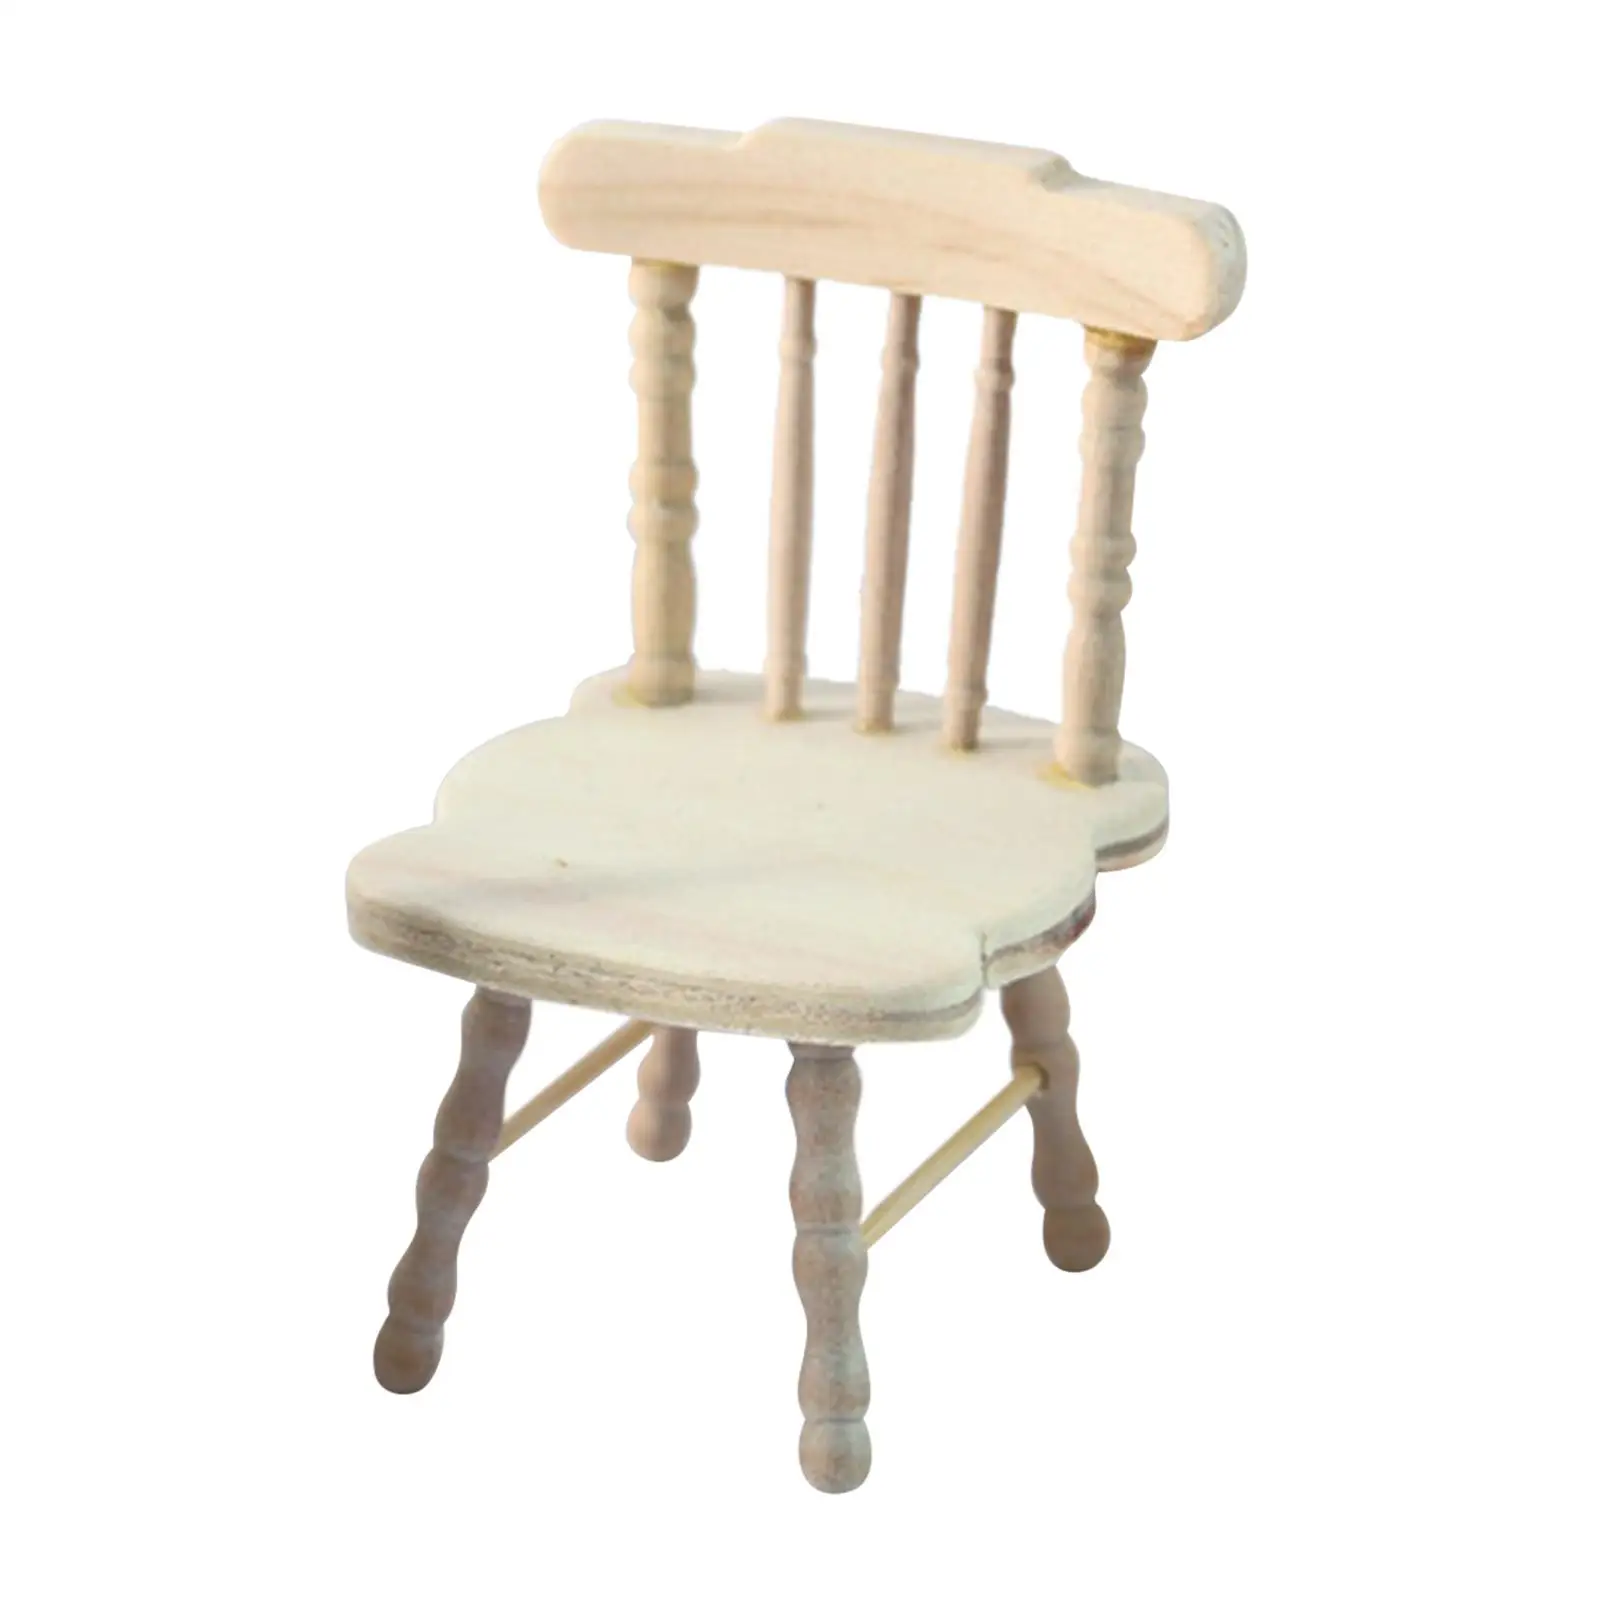 1:6 Dollhouse Furniture Accessories, Chair Handmade DIY 1:12 Toys for Xmas